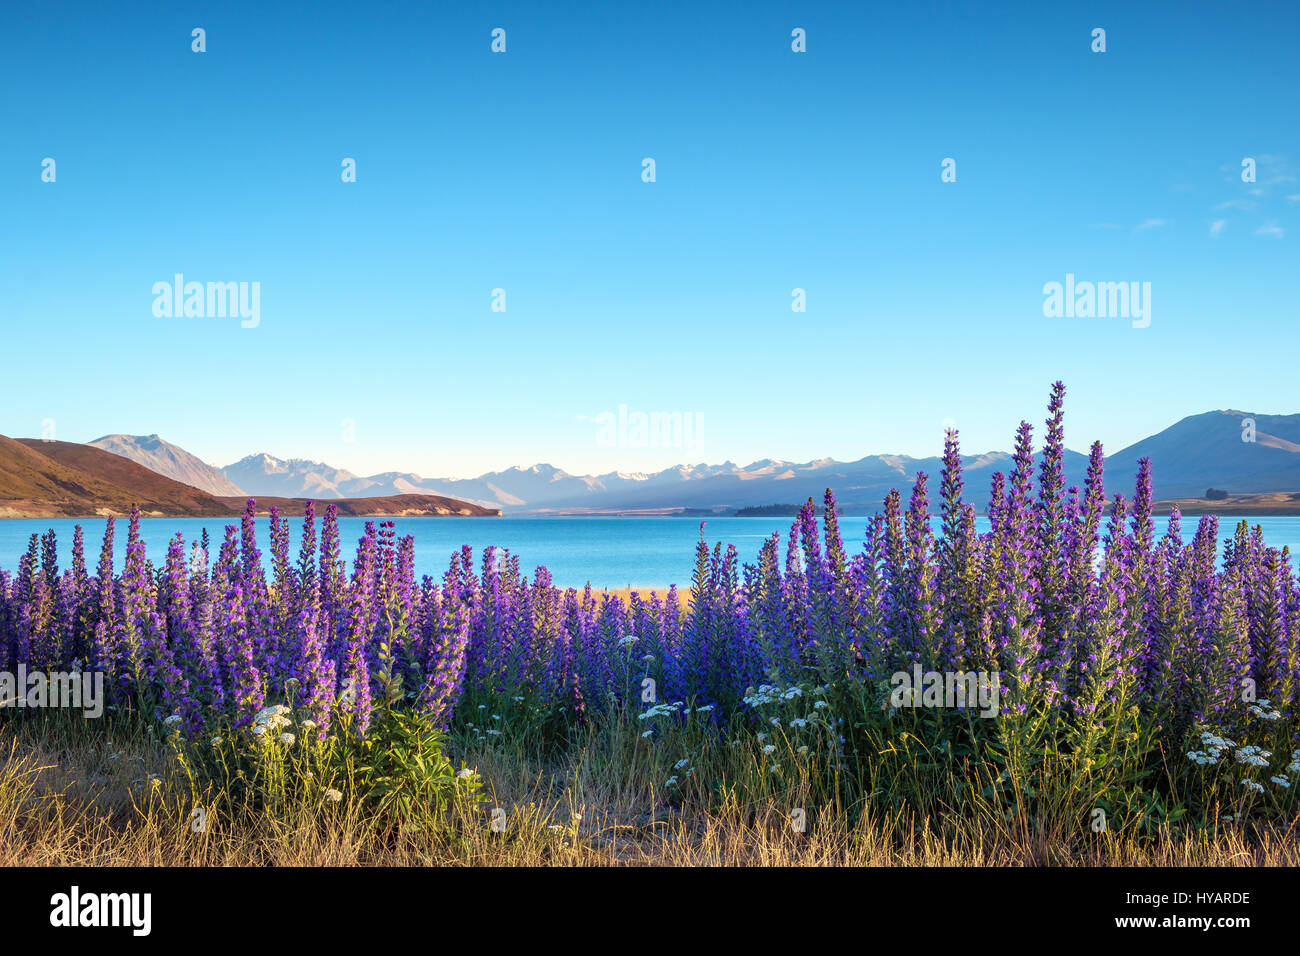 Landschaftsblick auf Lake Tekapo und bunten Lupinen Blumen bei Sonnenaufgang, Südalpen, New Zealand Stockfoto